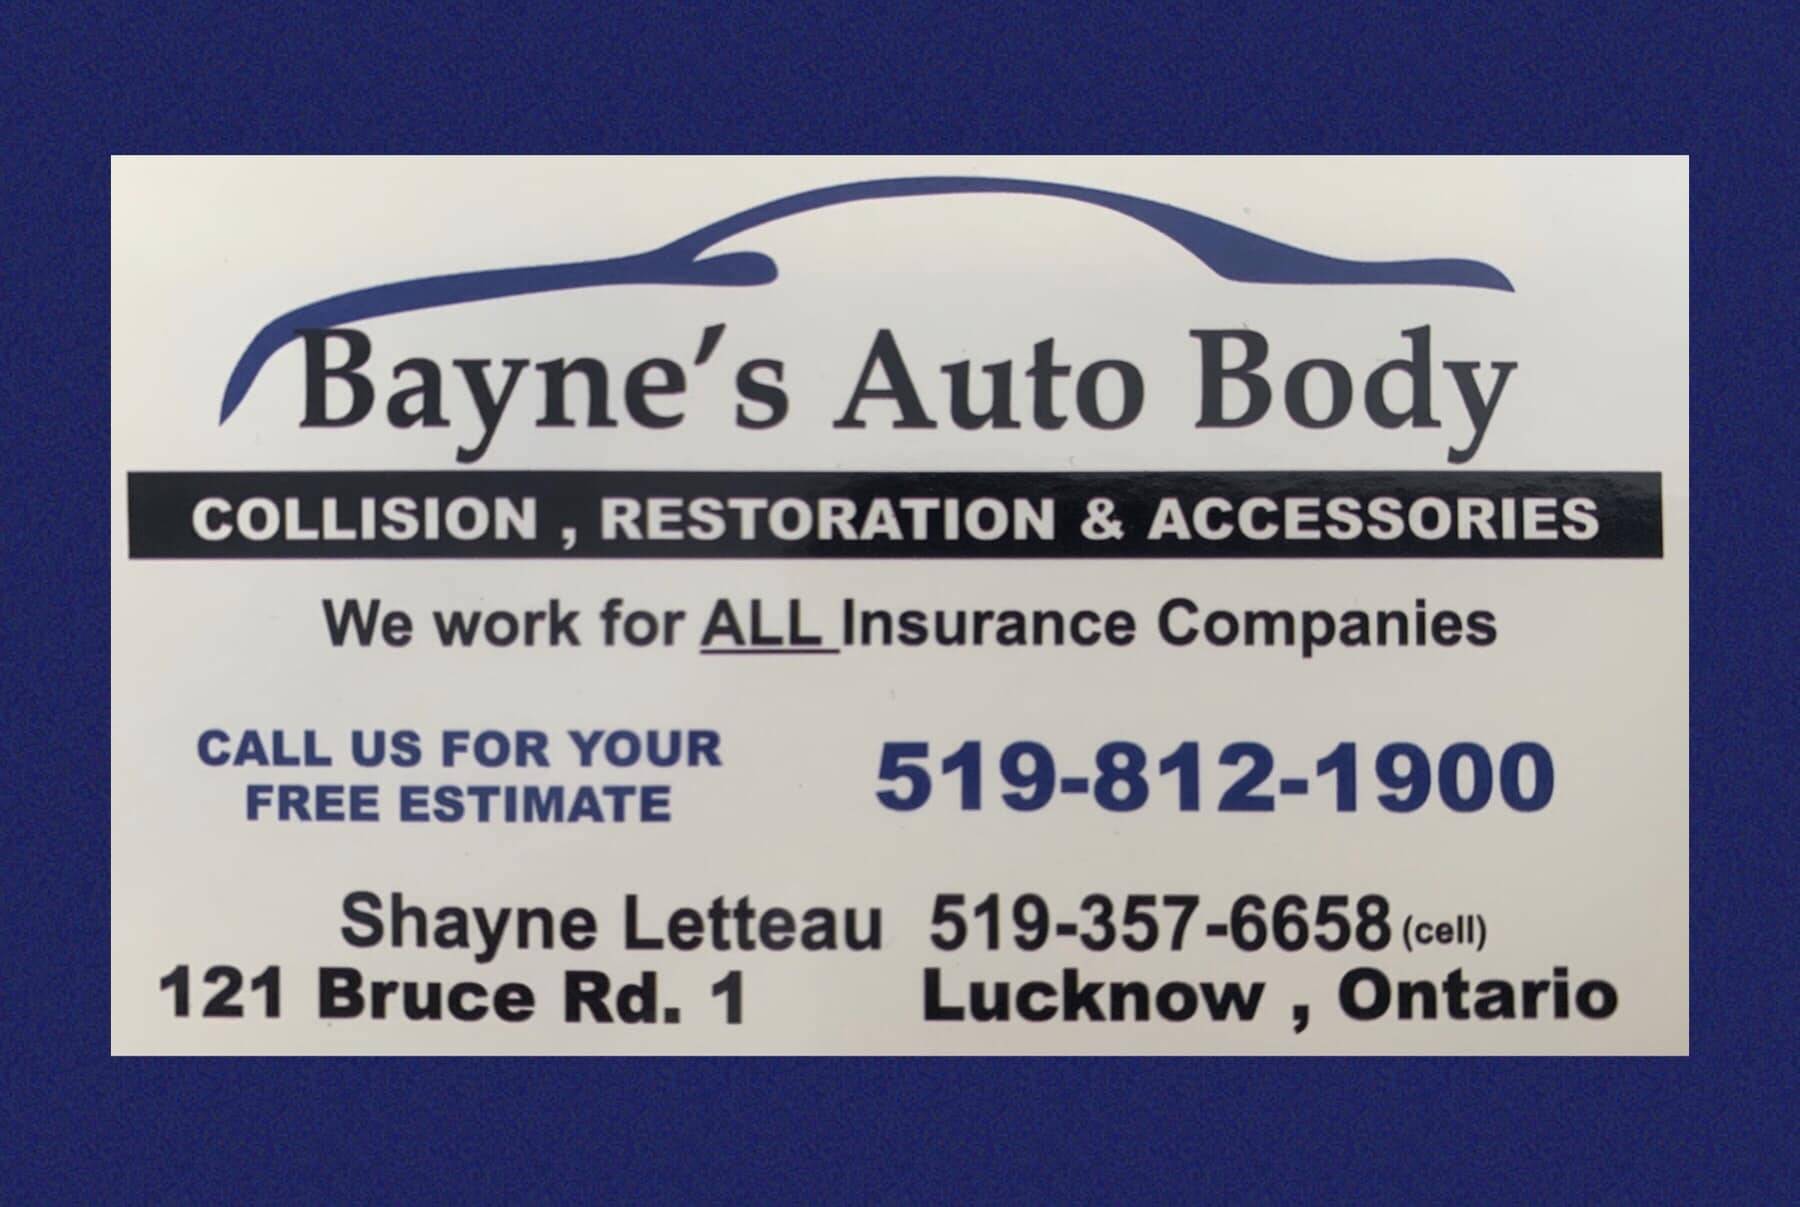 Bayne's Auto Body